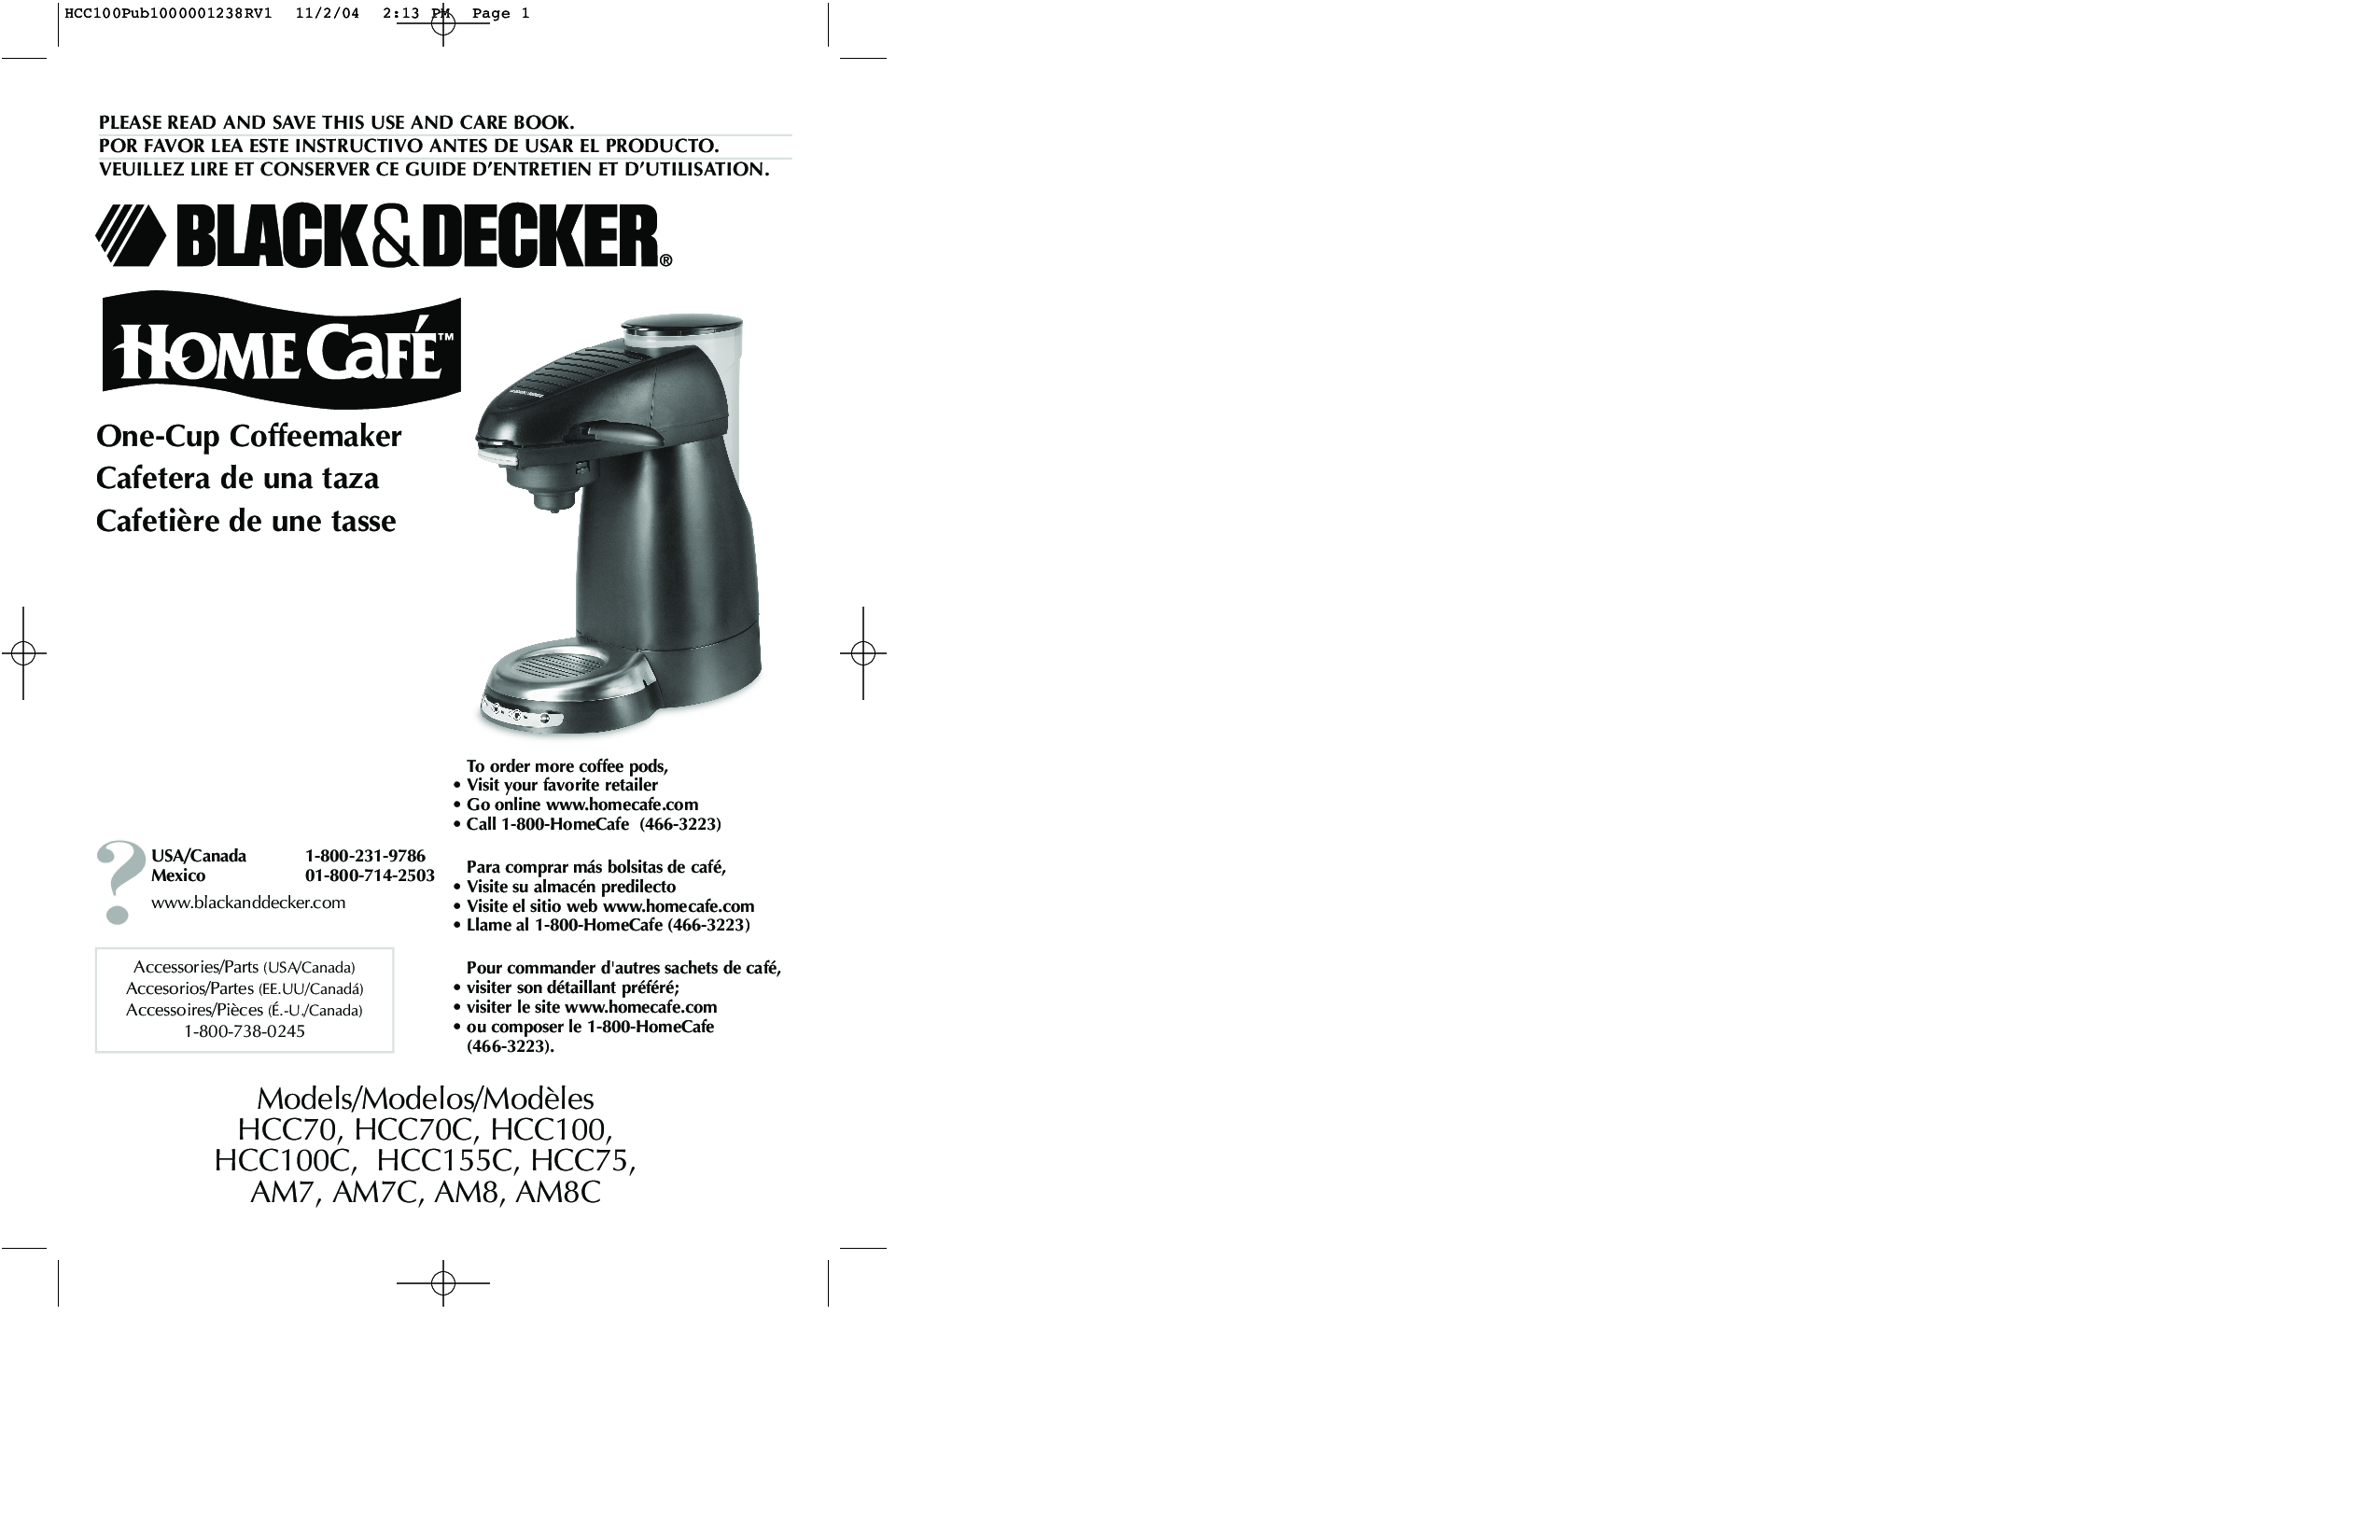 Black & Decker HCC100, AM8C, HCC75, HCC155C, HCC70C User Manual